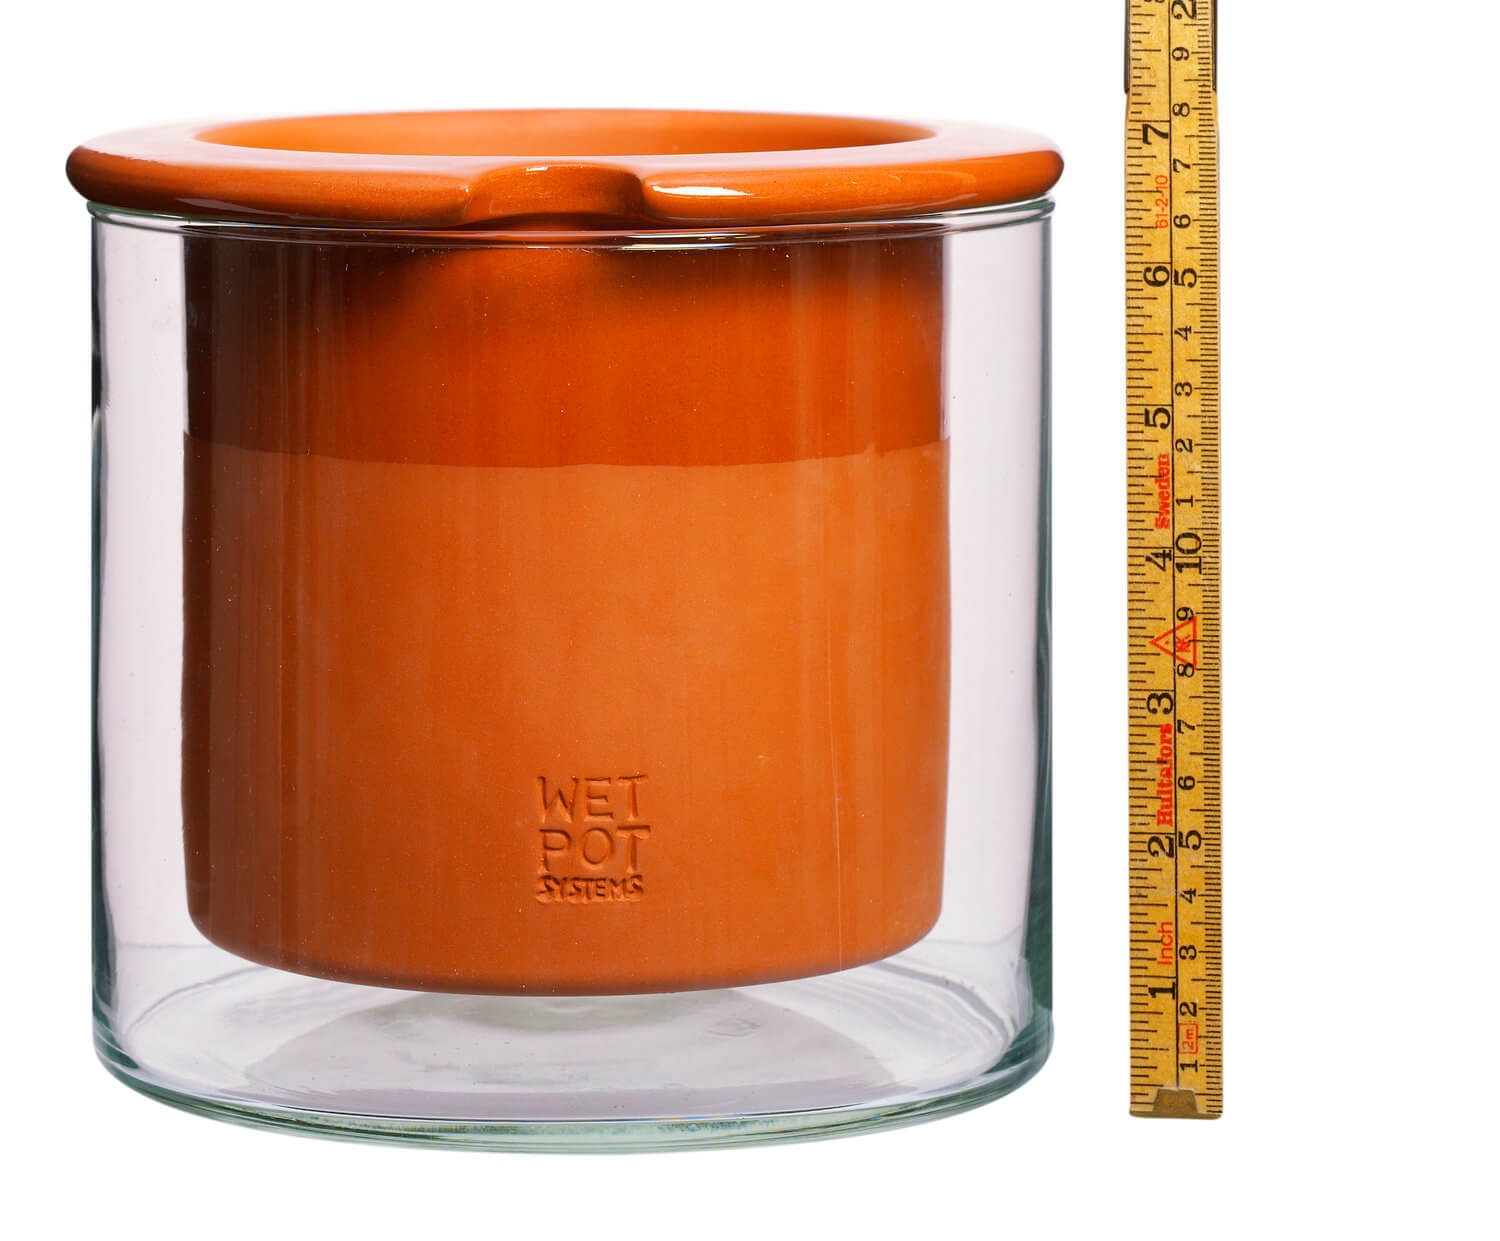 Hình ảnh Wet Pot size Trung Bình: Medium